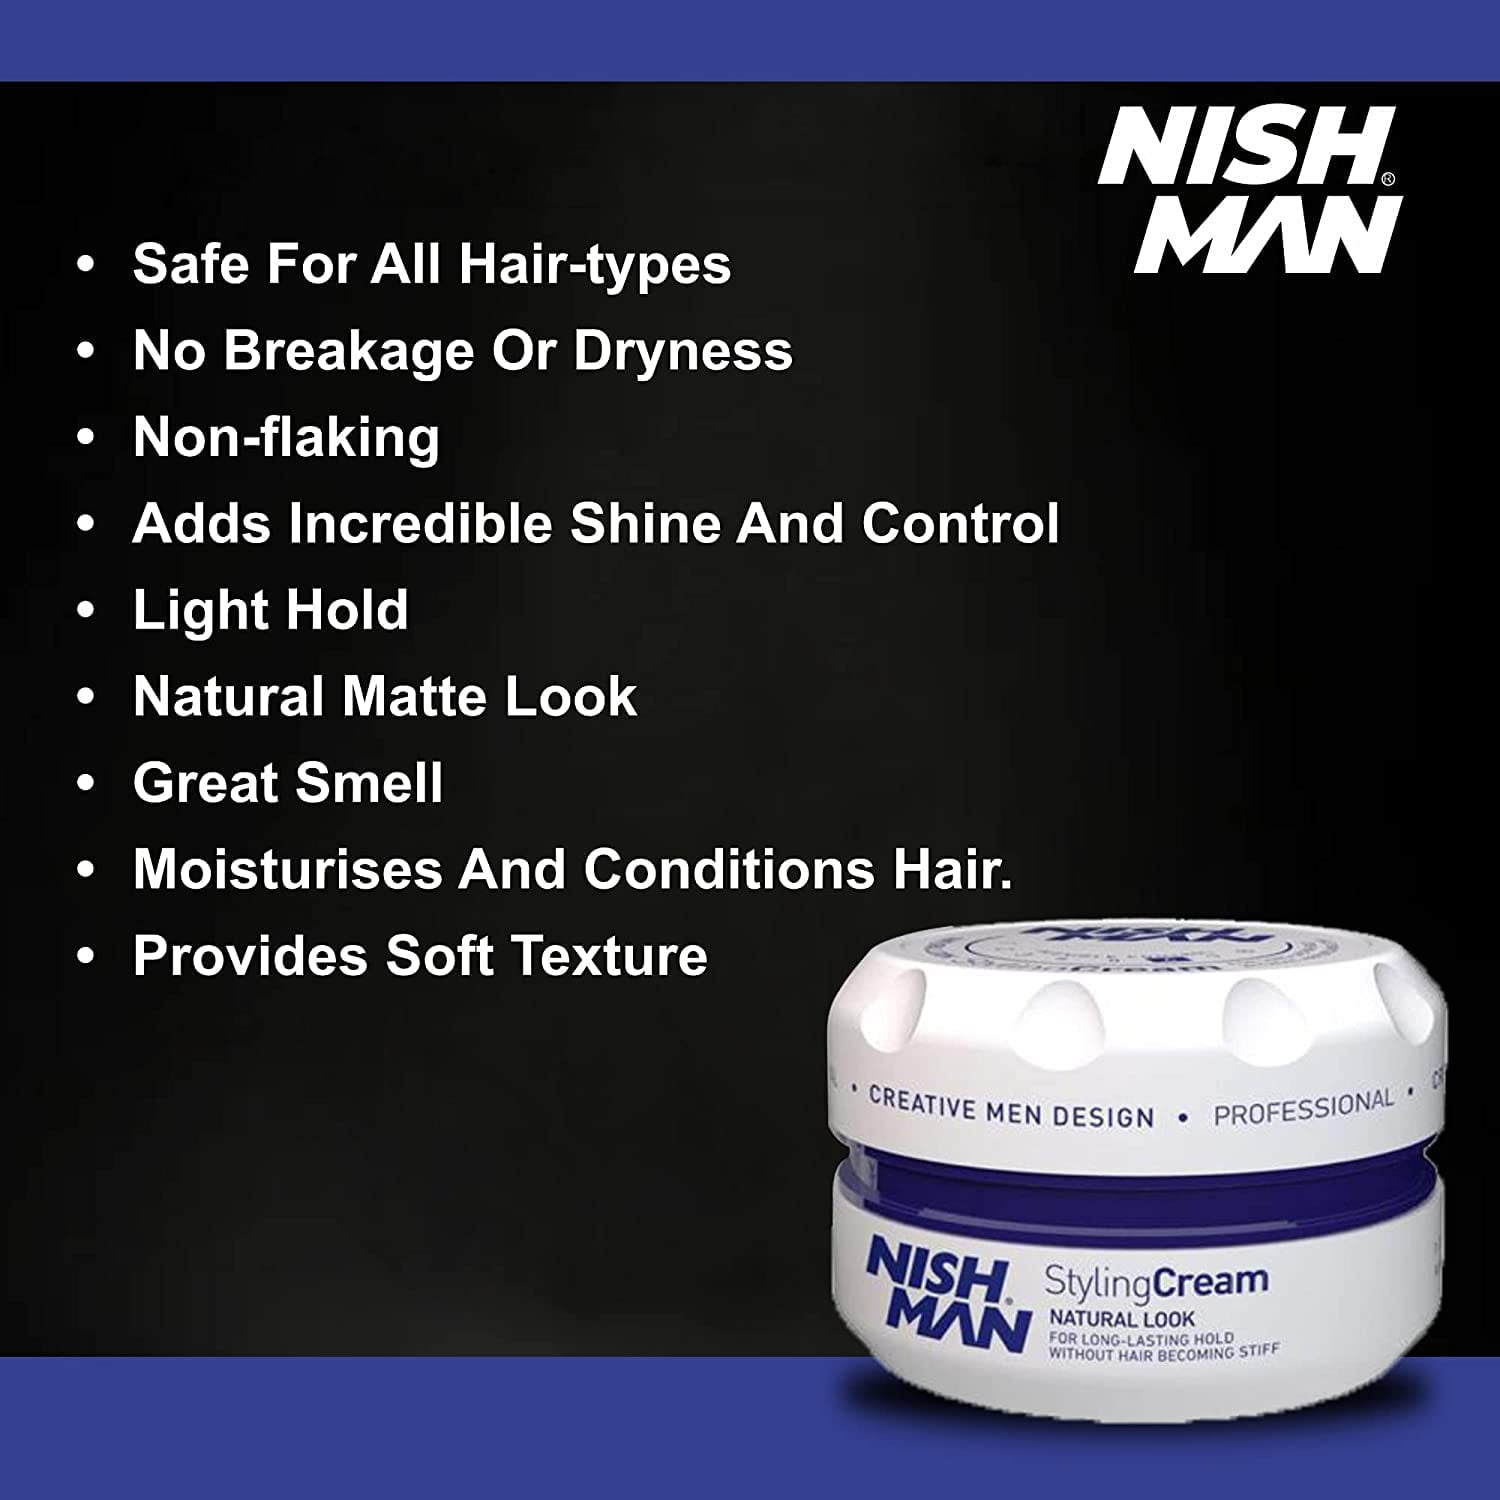 Nishman Hair Styling Series  Hair Wax (150ml - S1 BlackWidow Spider Wax) 